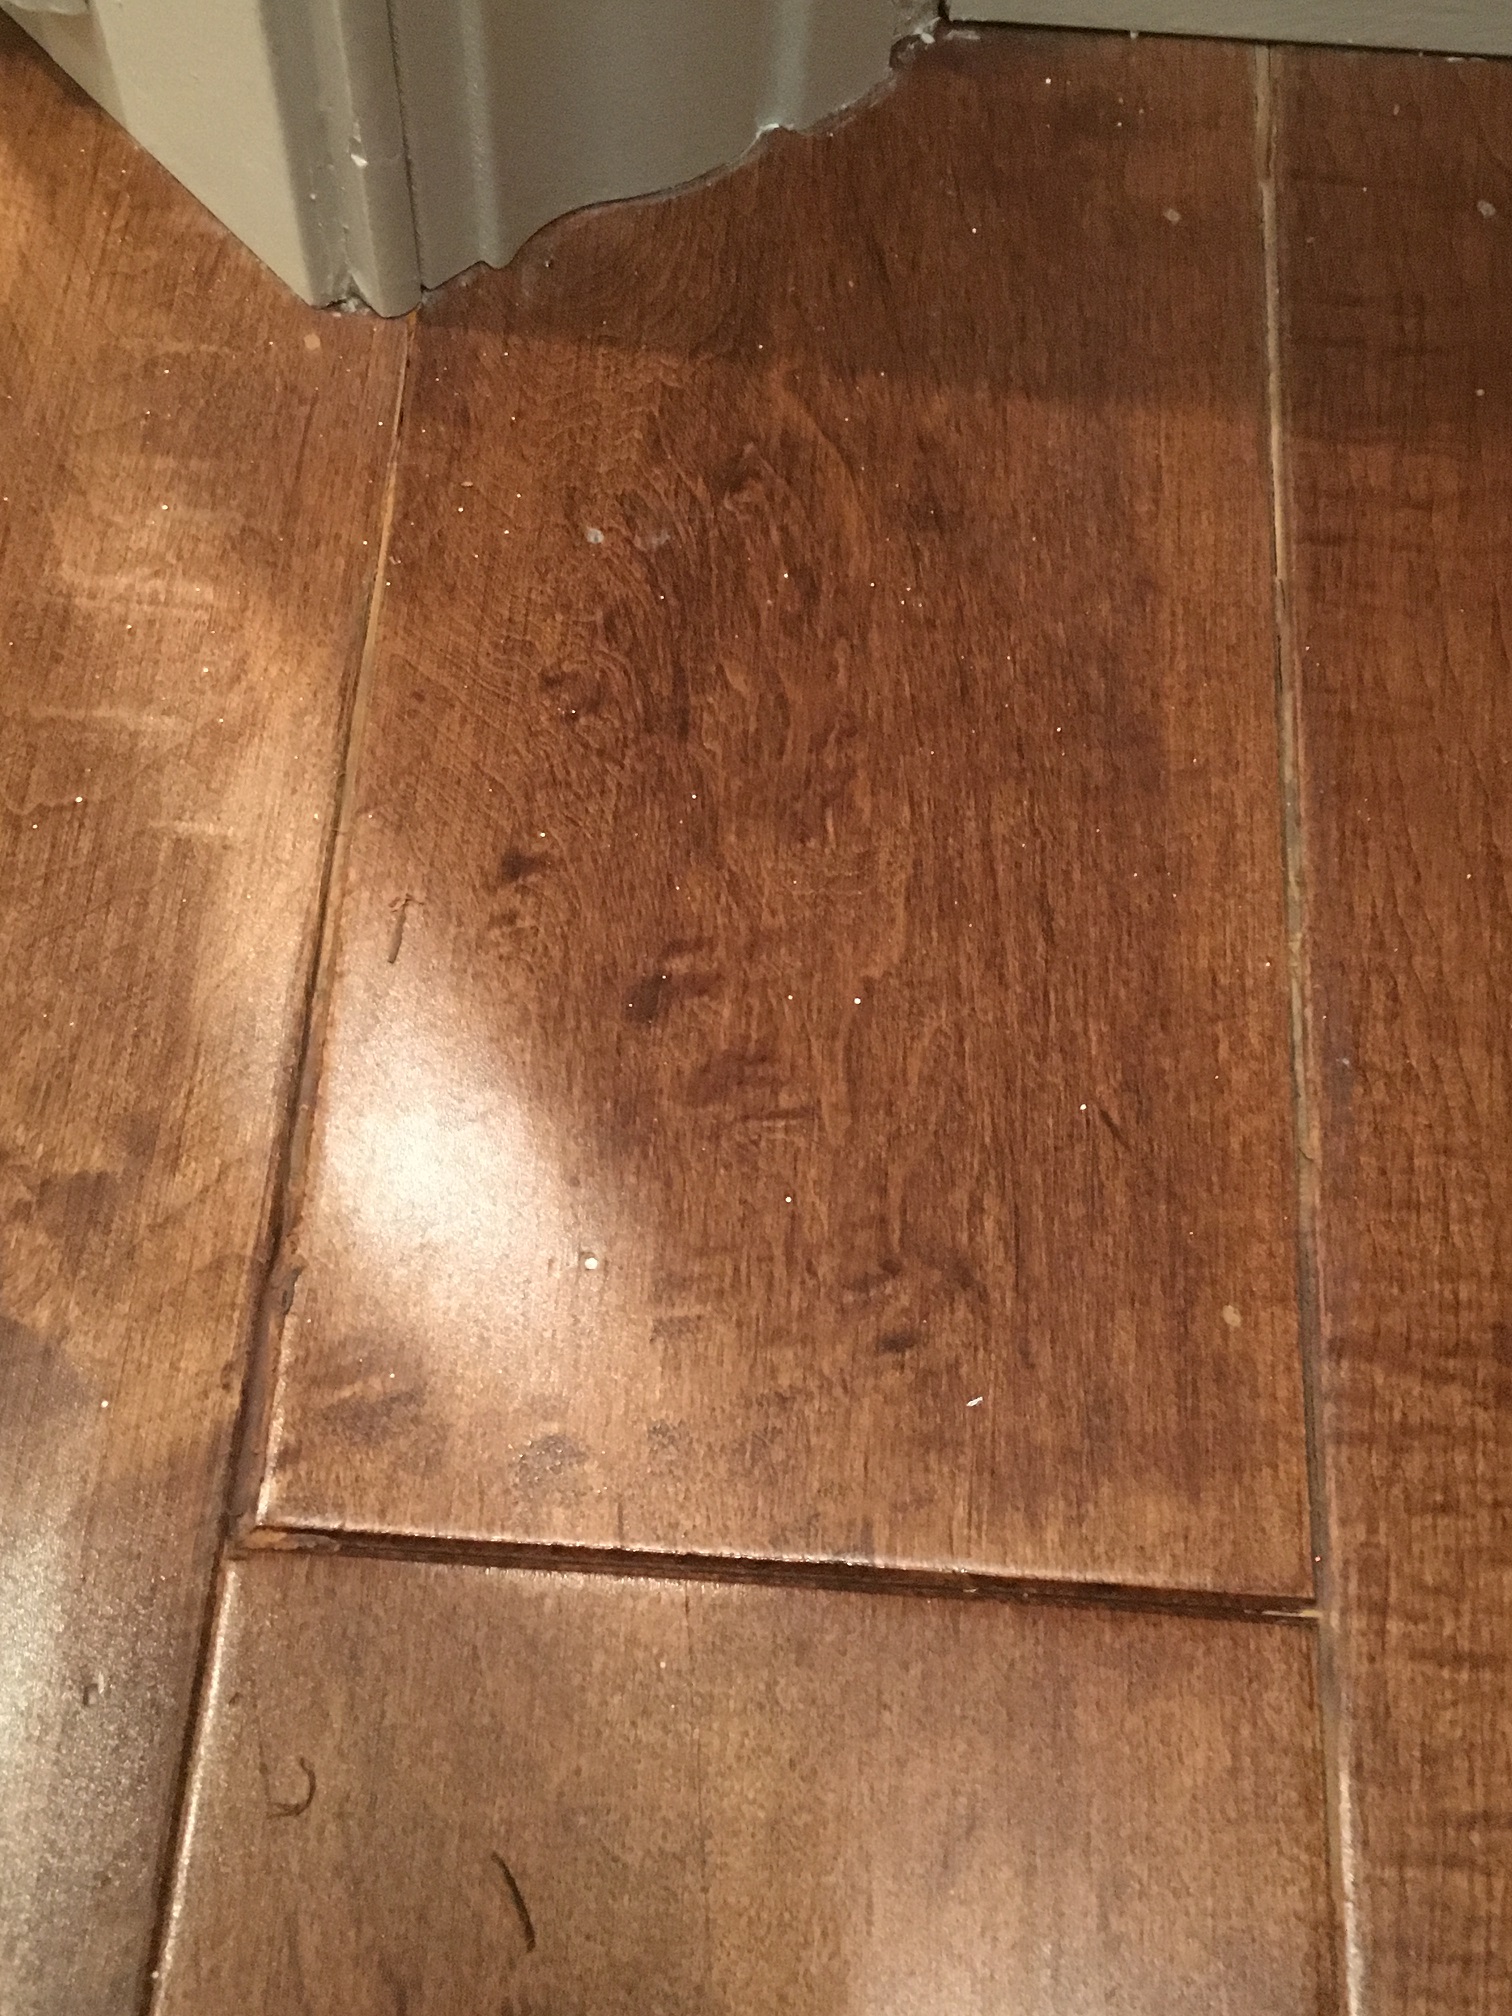 Wood Floor Install Gaps Putty Ok